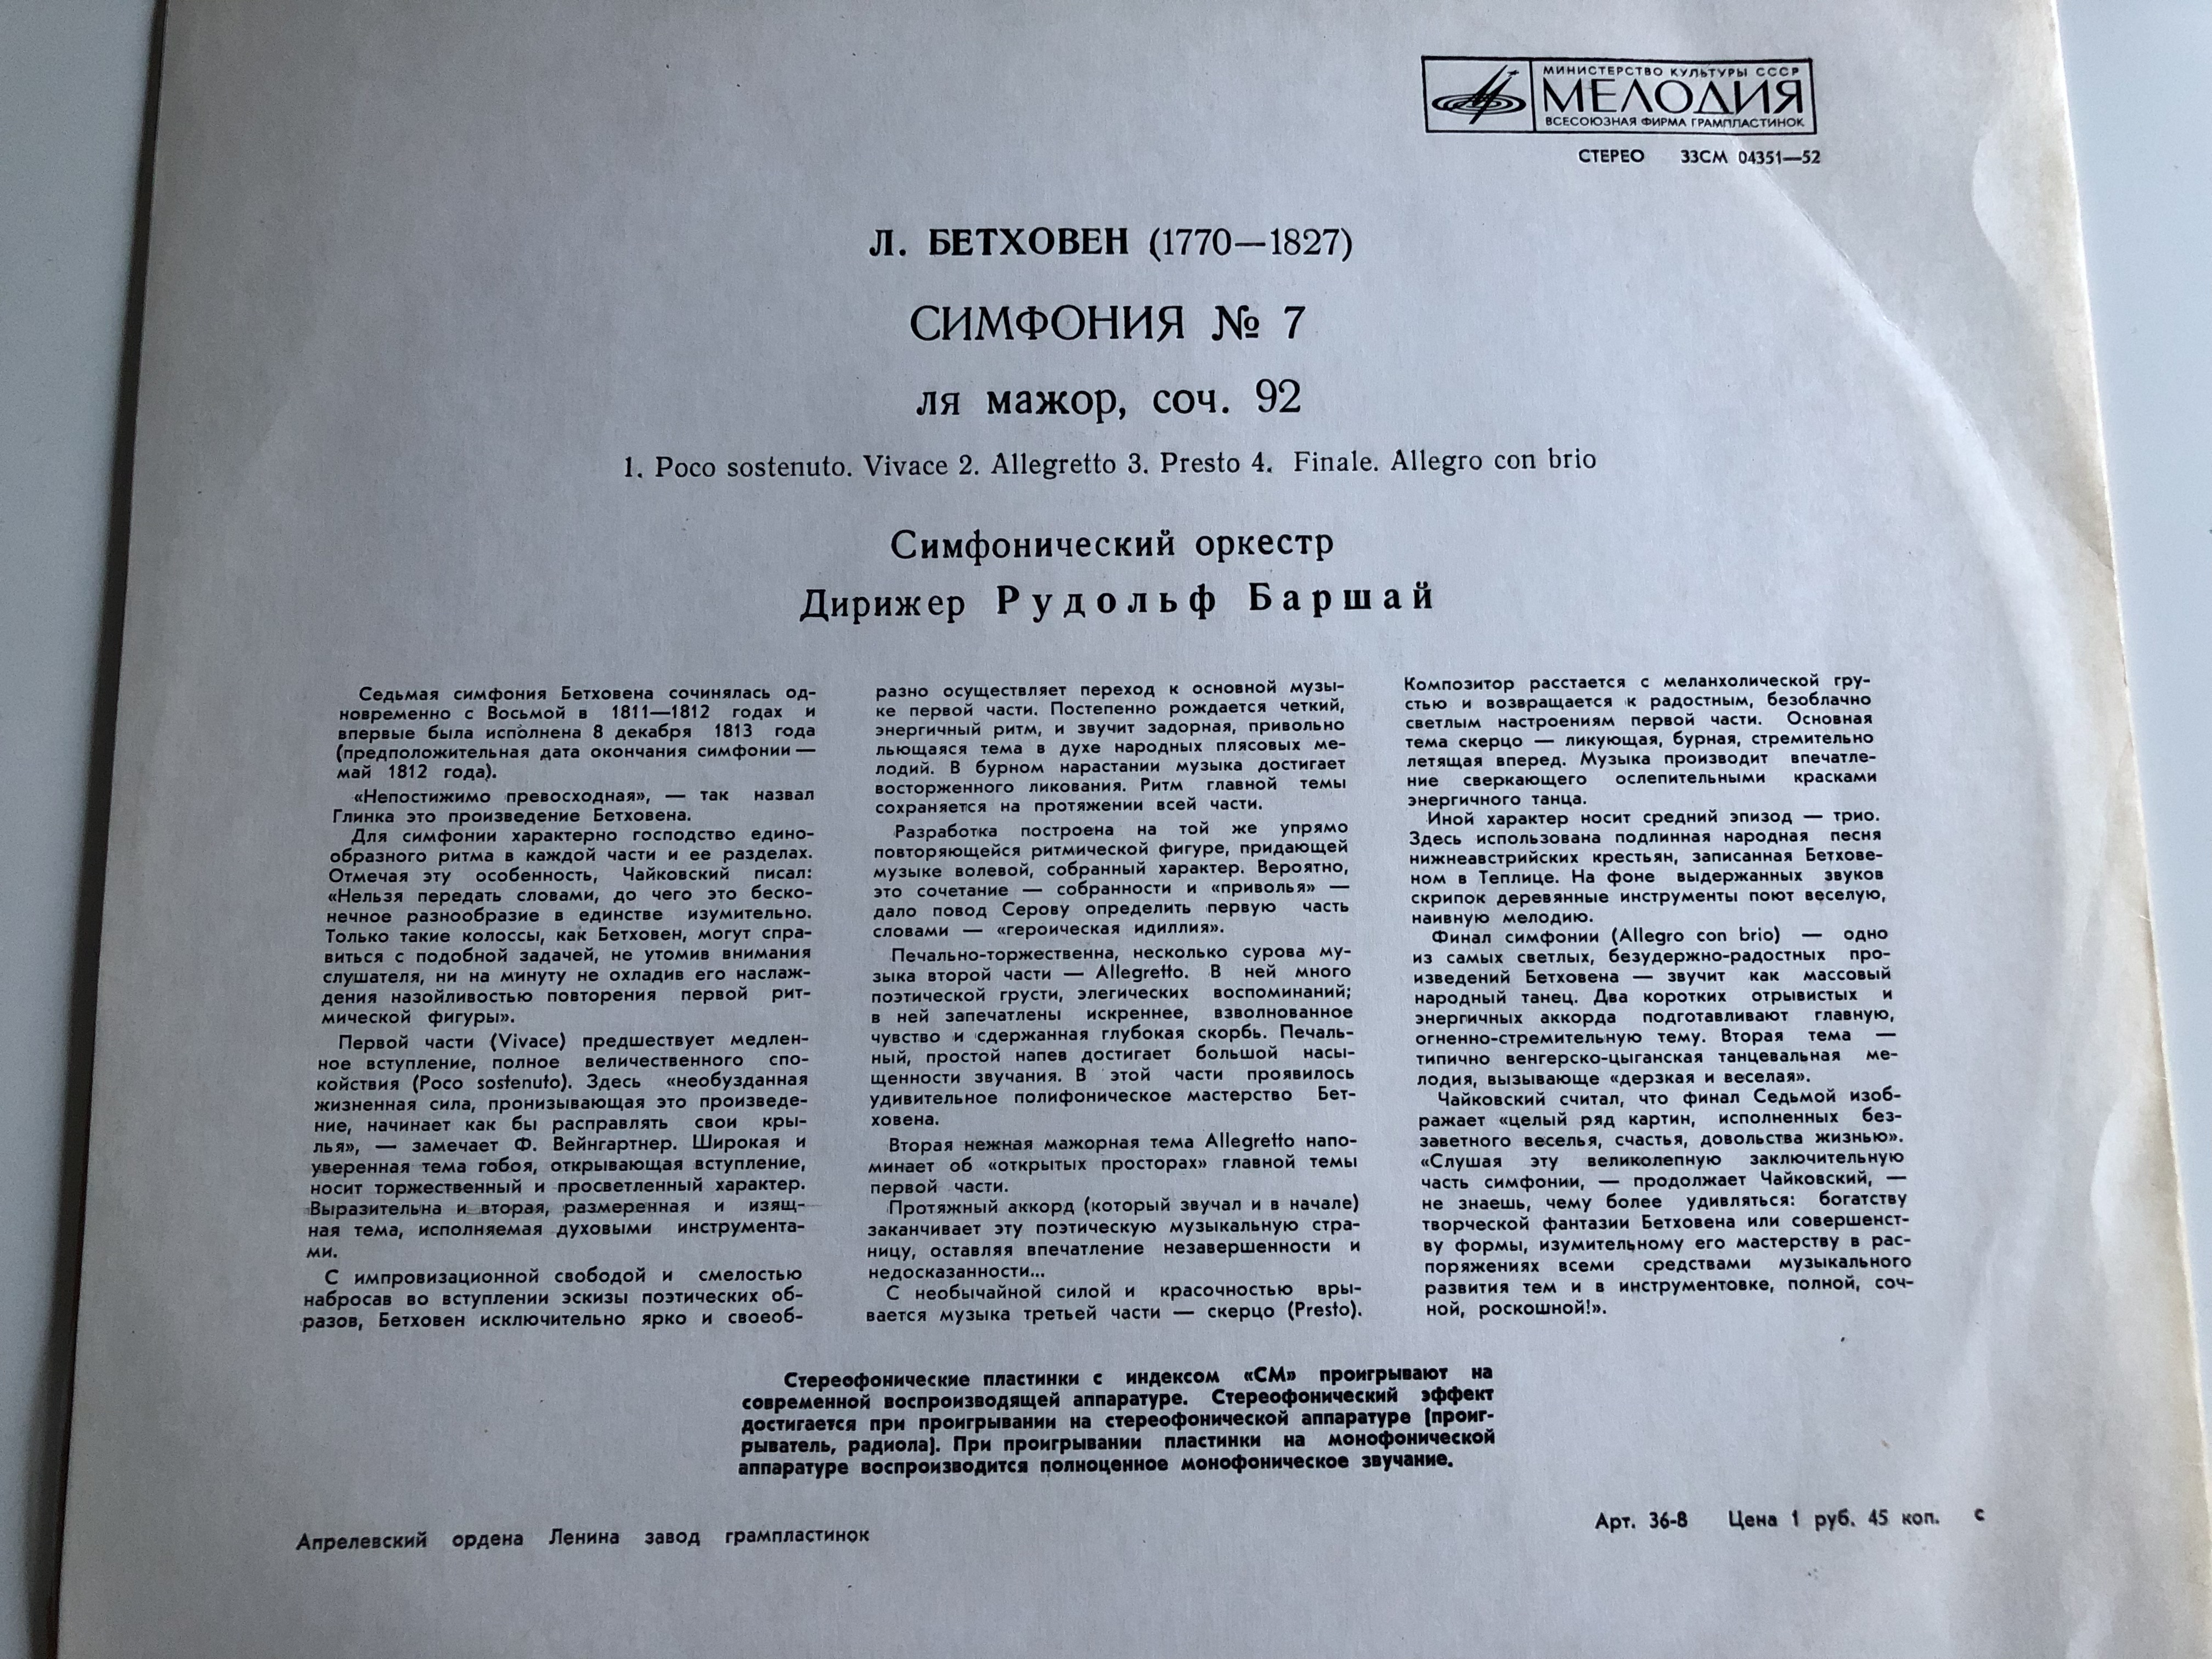 ludwig-van-beethoven-symphony-no.-7-conducted-rudof-barshai-7-.-92-lp-stereo-33cm-04351-52-3-.jpg